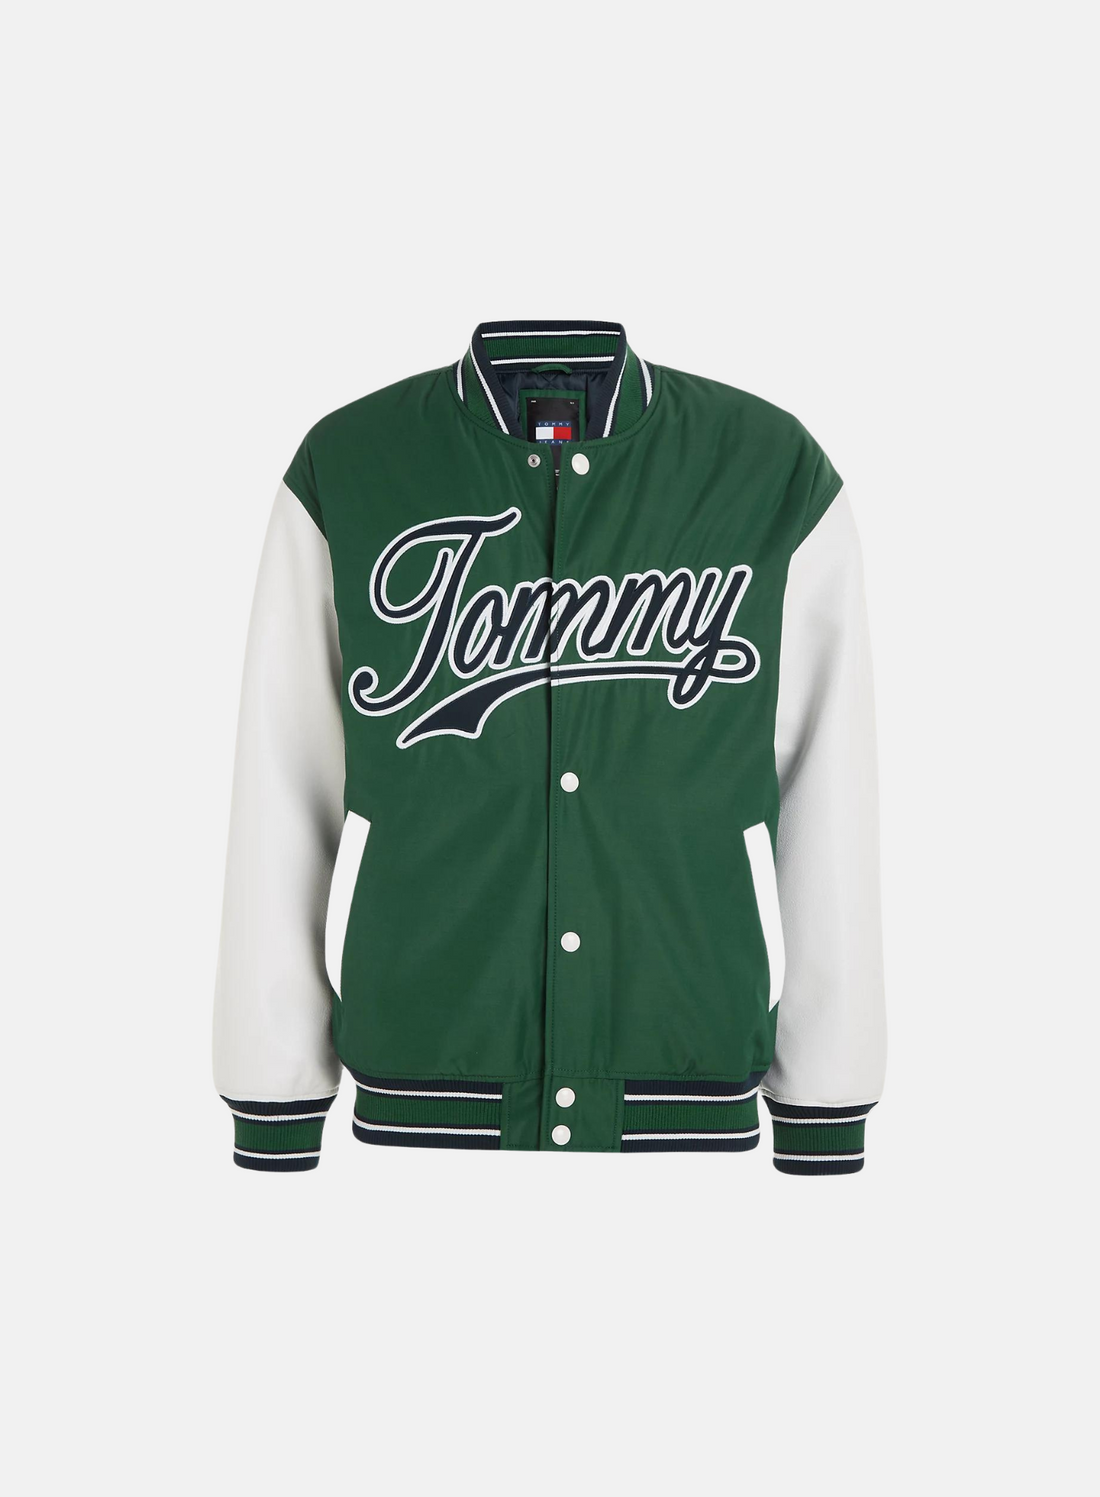 Tommy Jeans Letterman Varsity Jacket Green - Hympala Store 